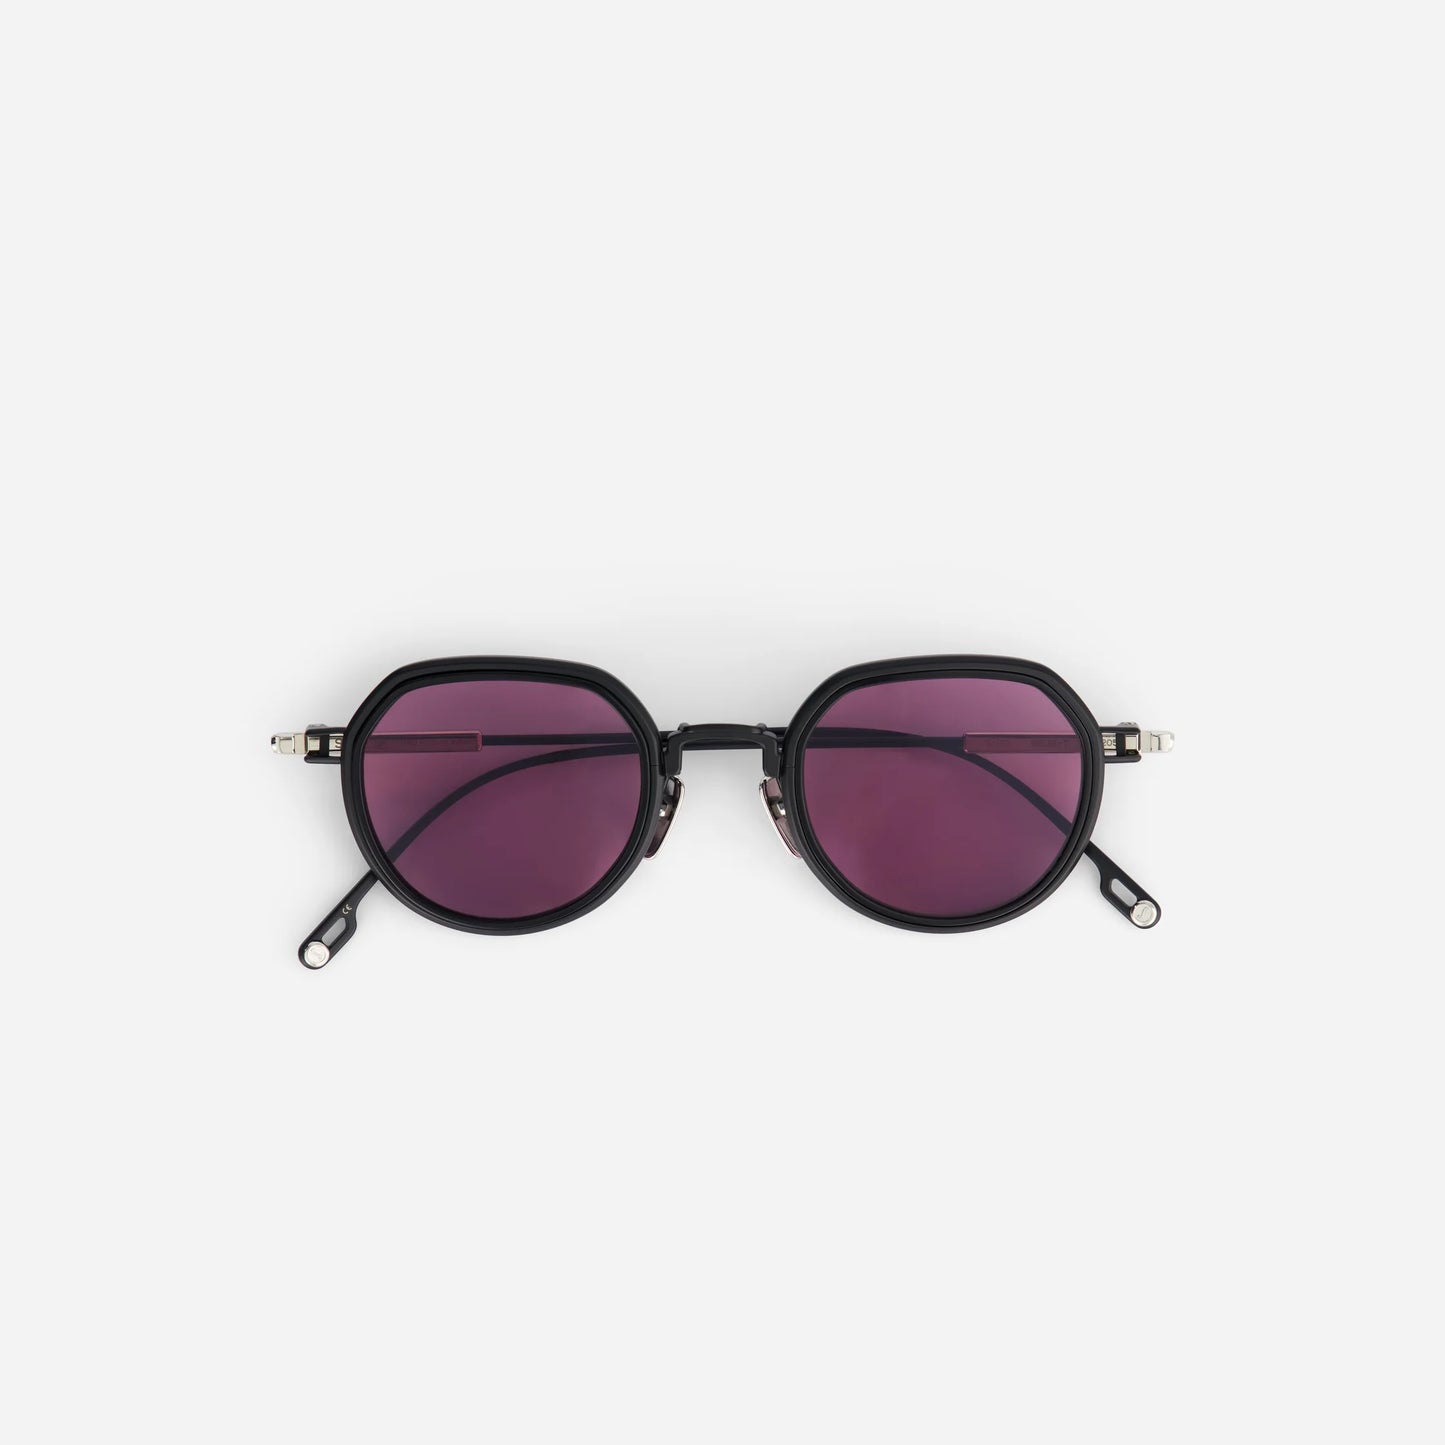 Belel-T S2205 sunglasses featuring vibrant purple lenses and a sleek black insert.